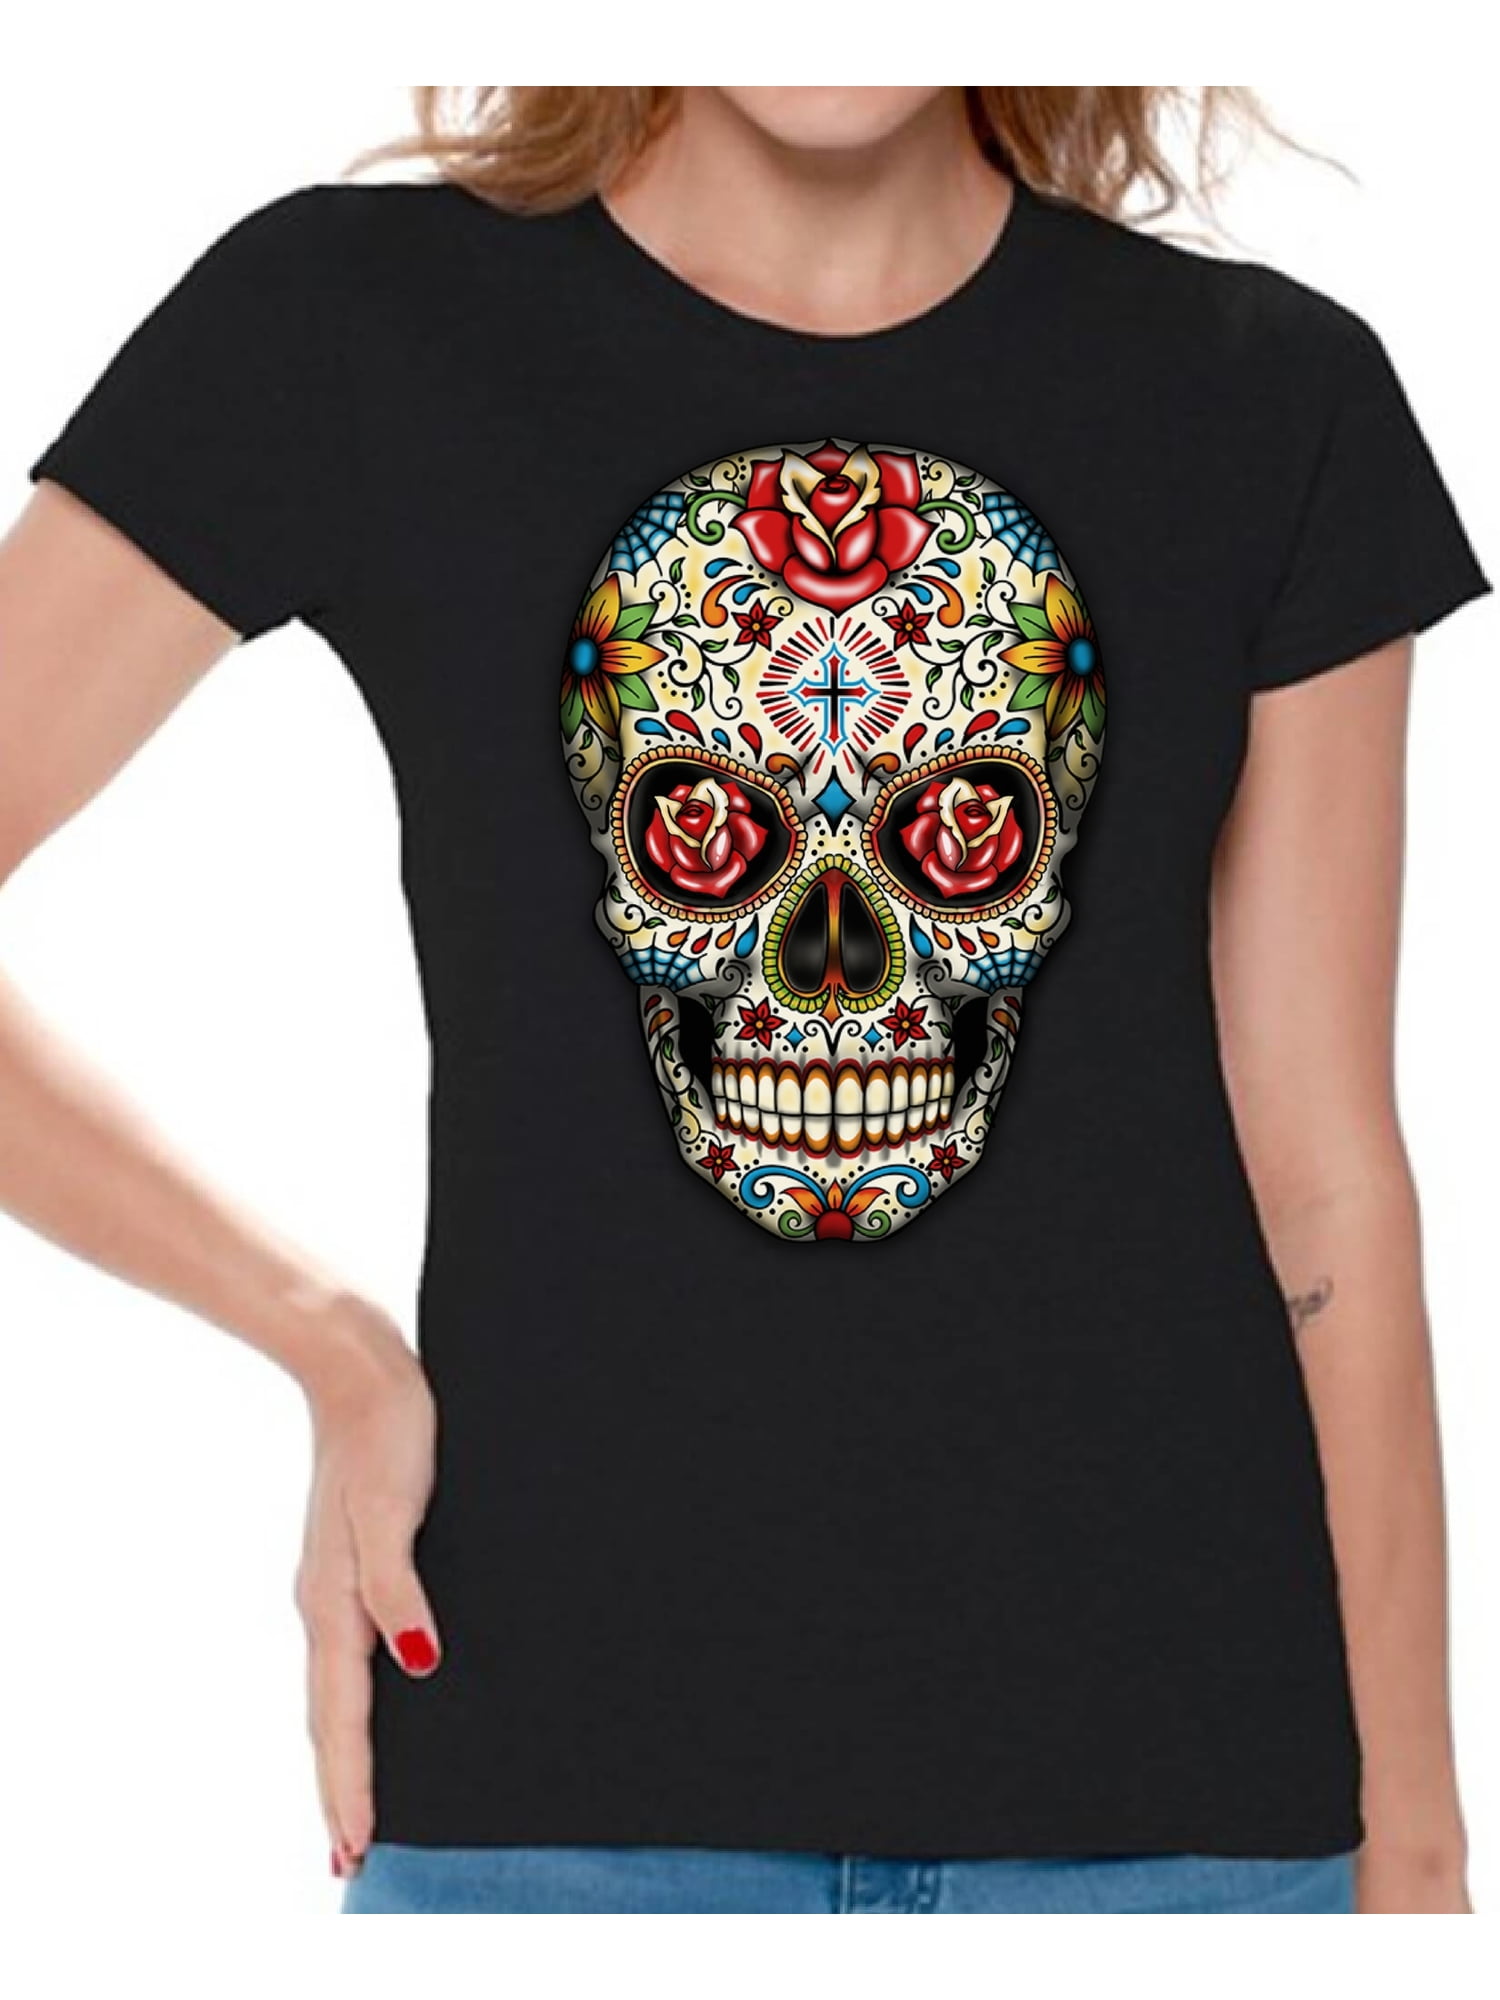 Rhinestone Sugar Skull T Shirt Colorful Floral Roses Tattoo Women's Small to 3XL 